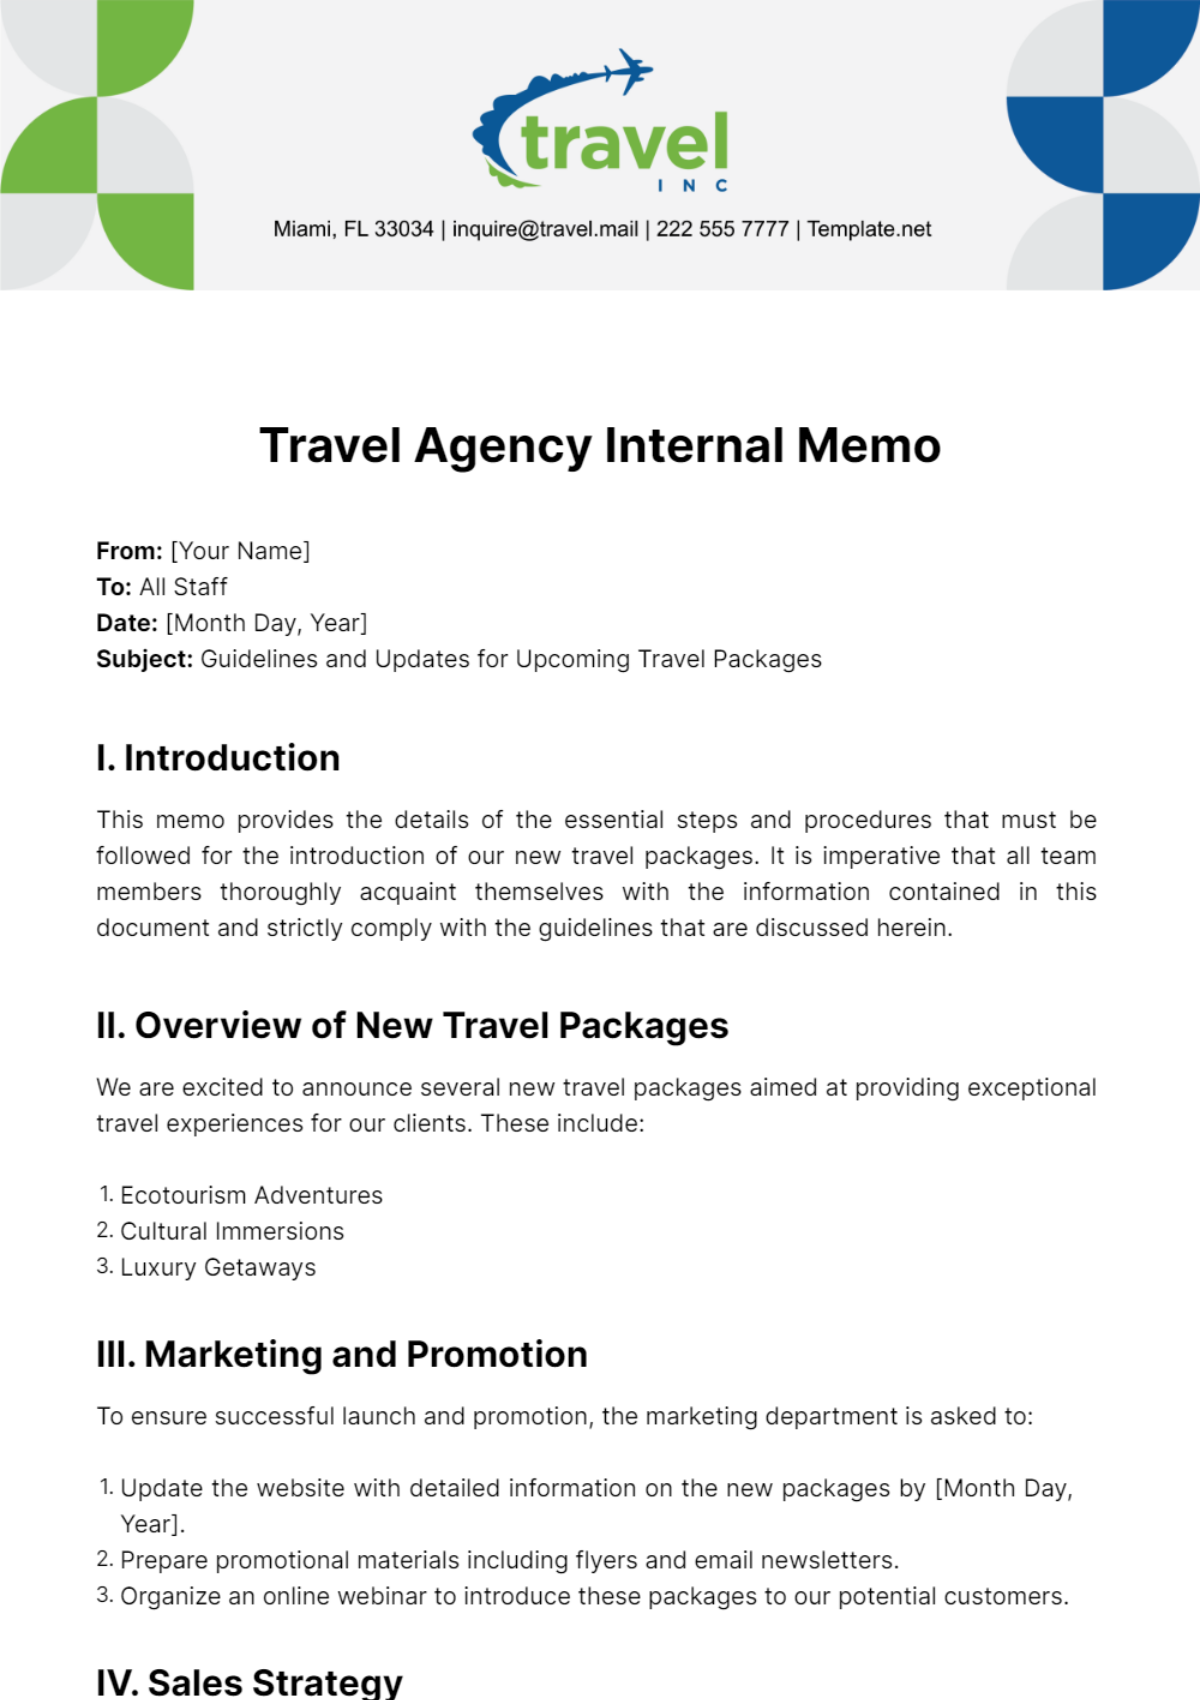 Travel Agency Internal Memo Template